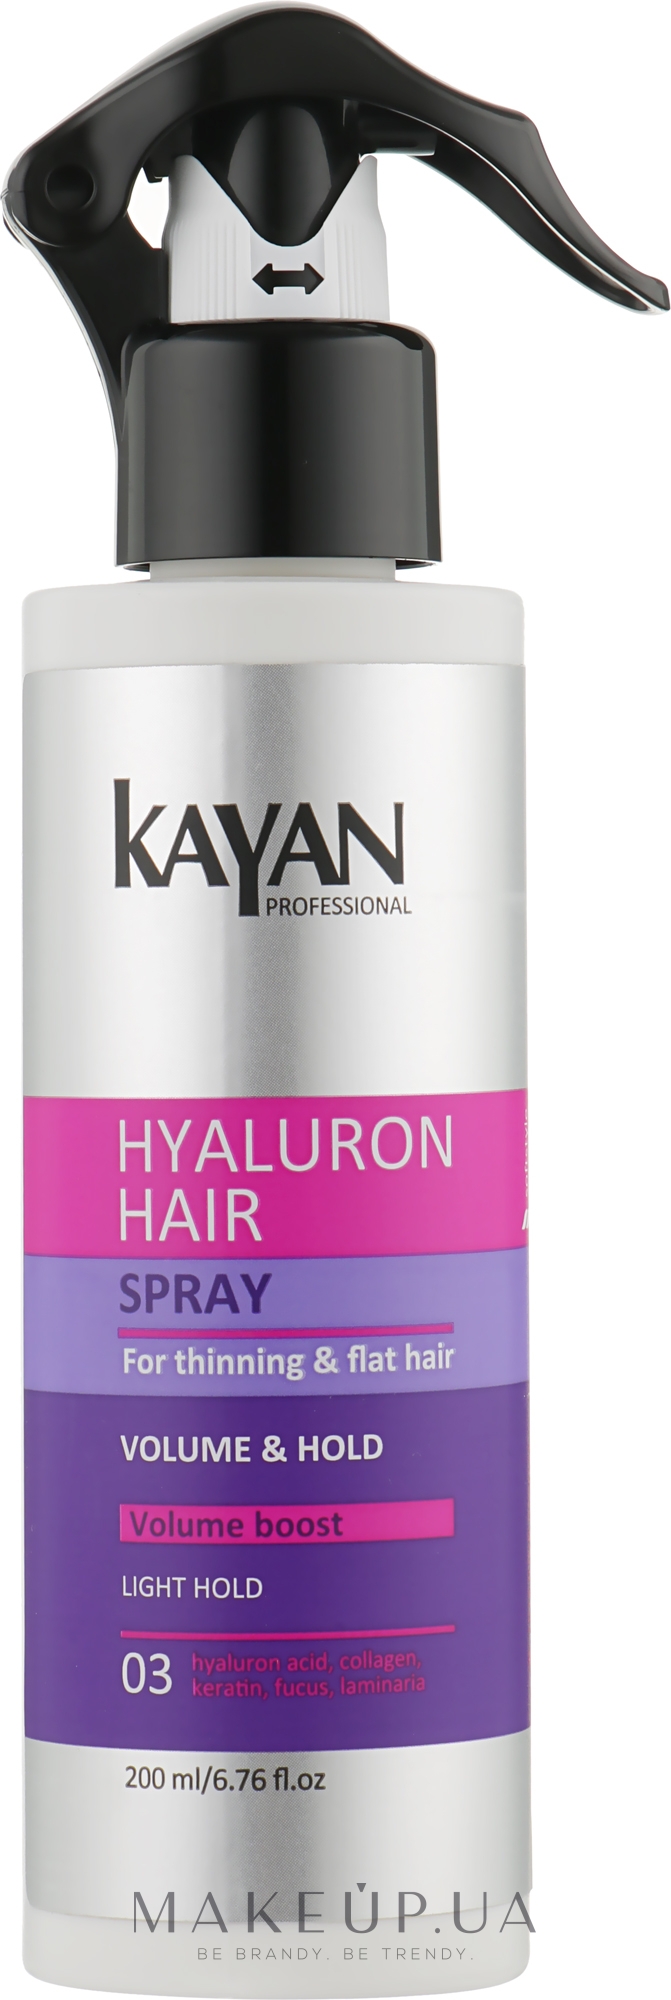 Спрей для тонких и лишенных объема волос - Kayan Professional Hyaluron Hair Spray — фото 200ml